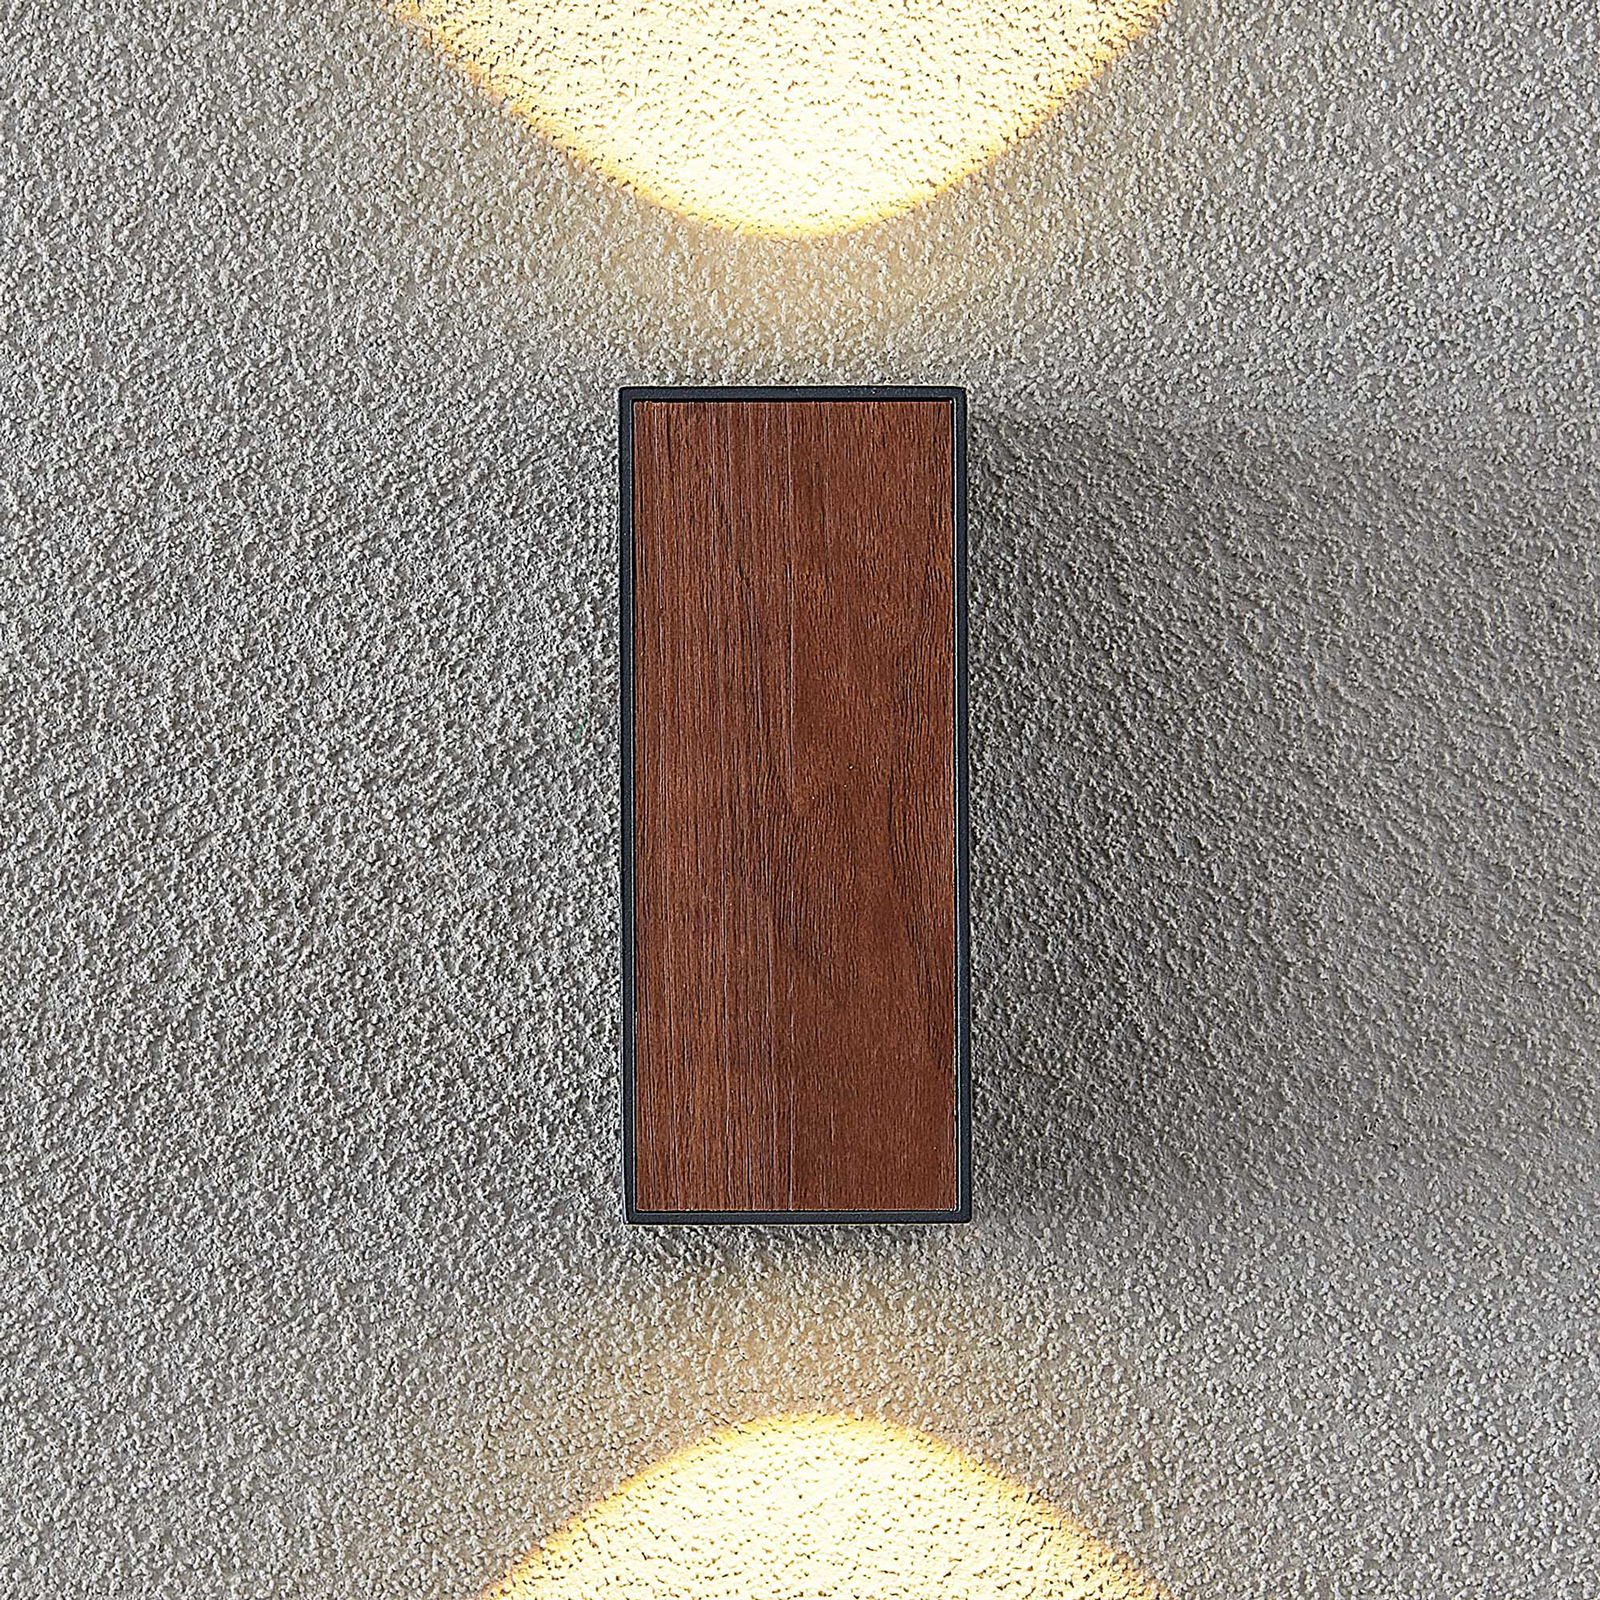 Lucande Cimala cuboid LED wall lamp, 14.4 cm high